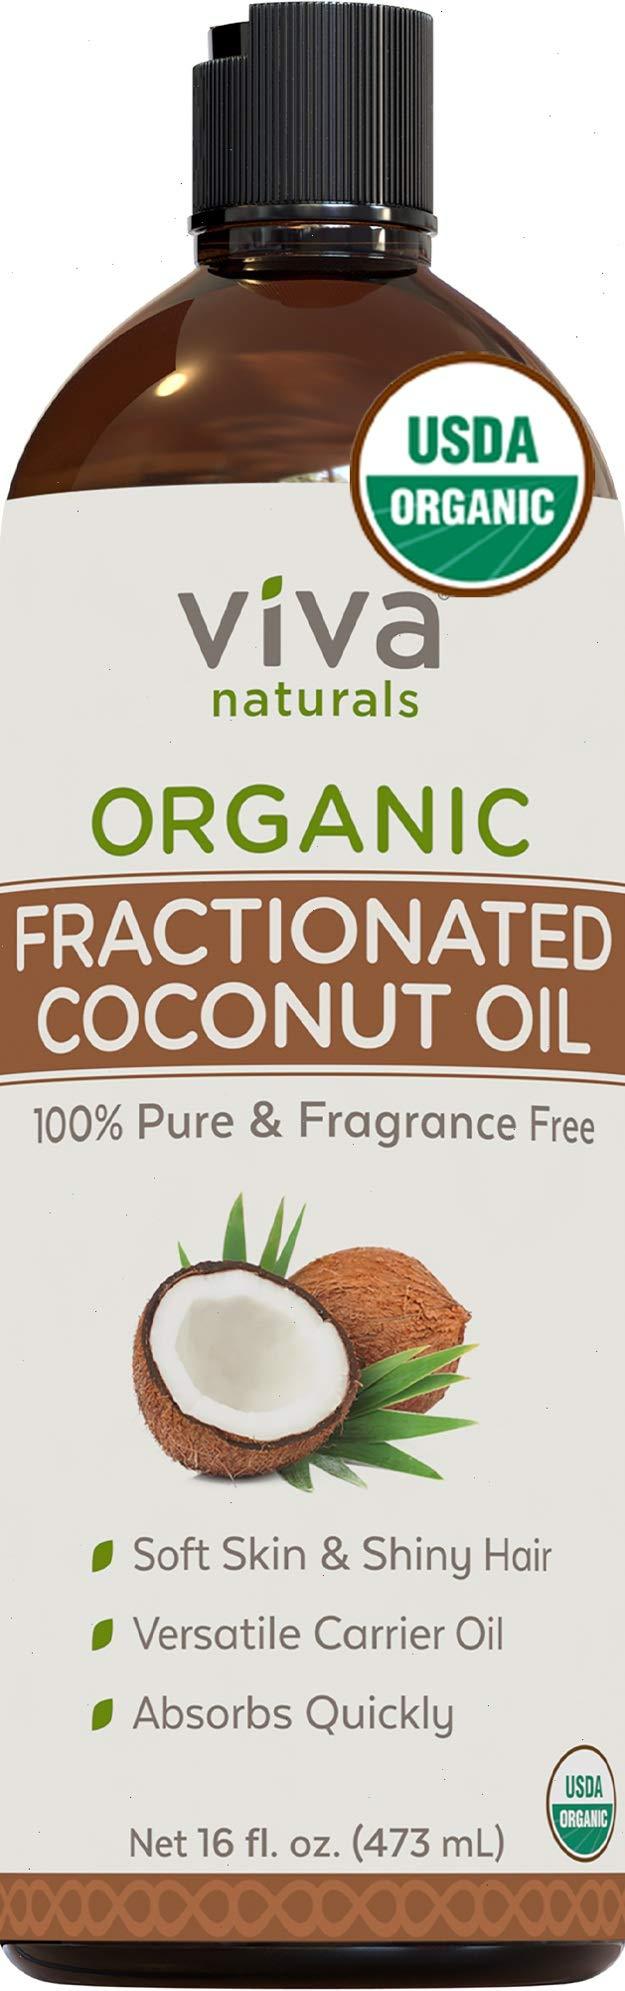 Viva Naturals, Organic Fractional Coconut Oil,Non-Greasy & Fragrance-Free for Hair, Skin And Versatile Carrier Oil - 16 fl oz. - BeesActive Australia